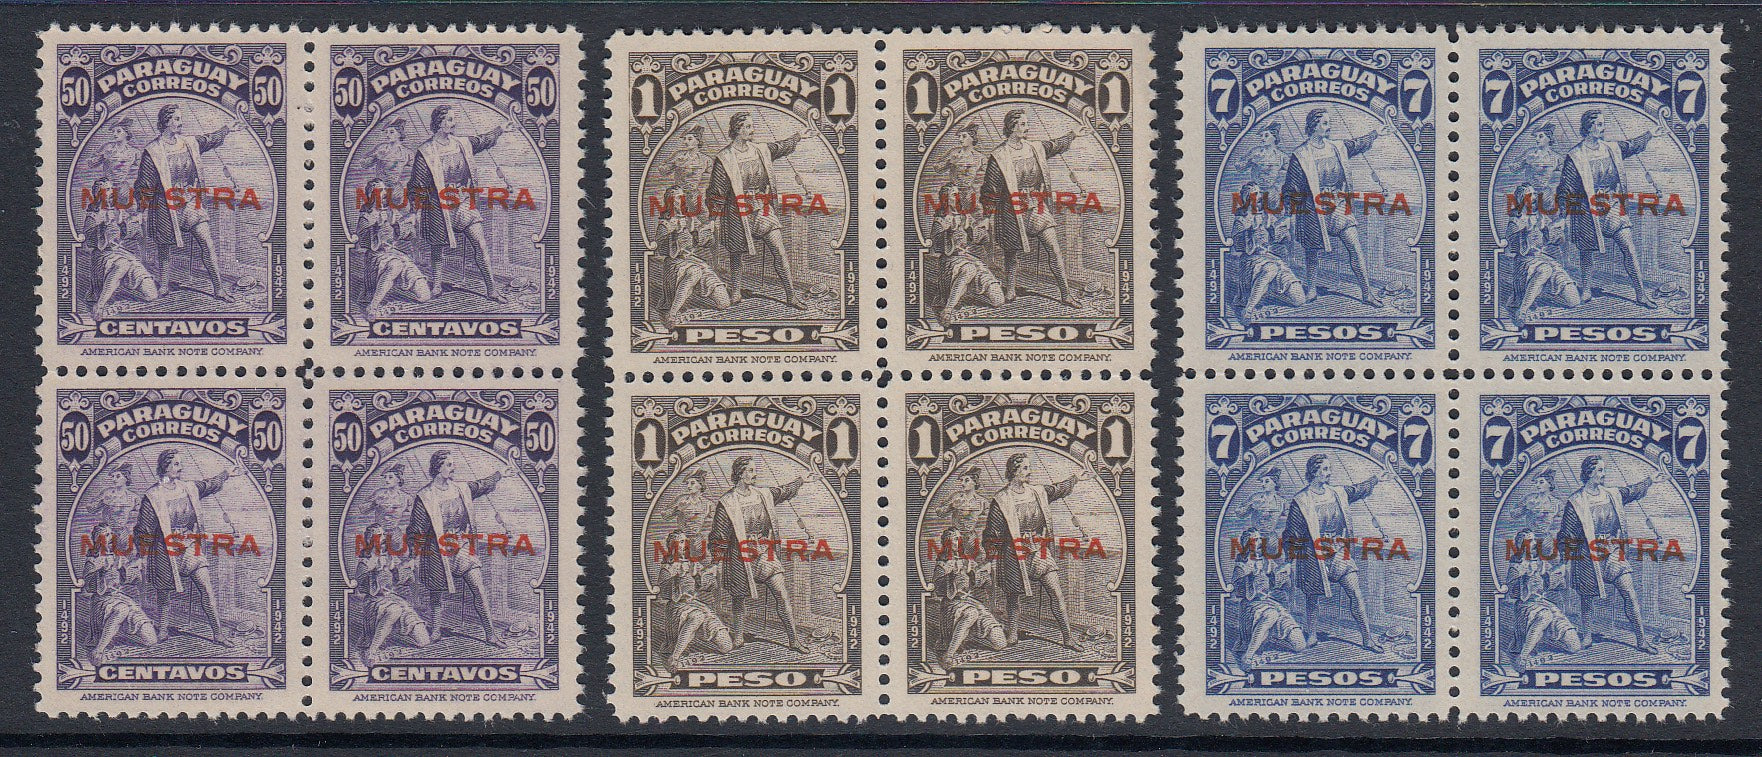 Paraguay 1943 Columbus Issue Specimen Blocks x 3 MNH. Scott 399-402 var